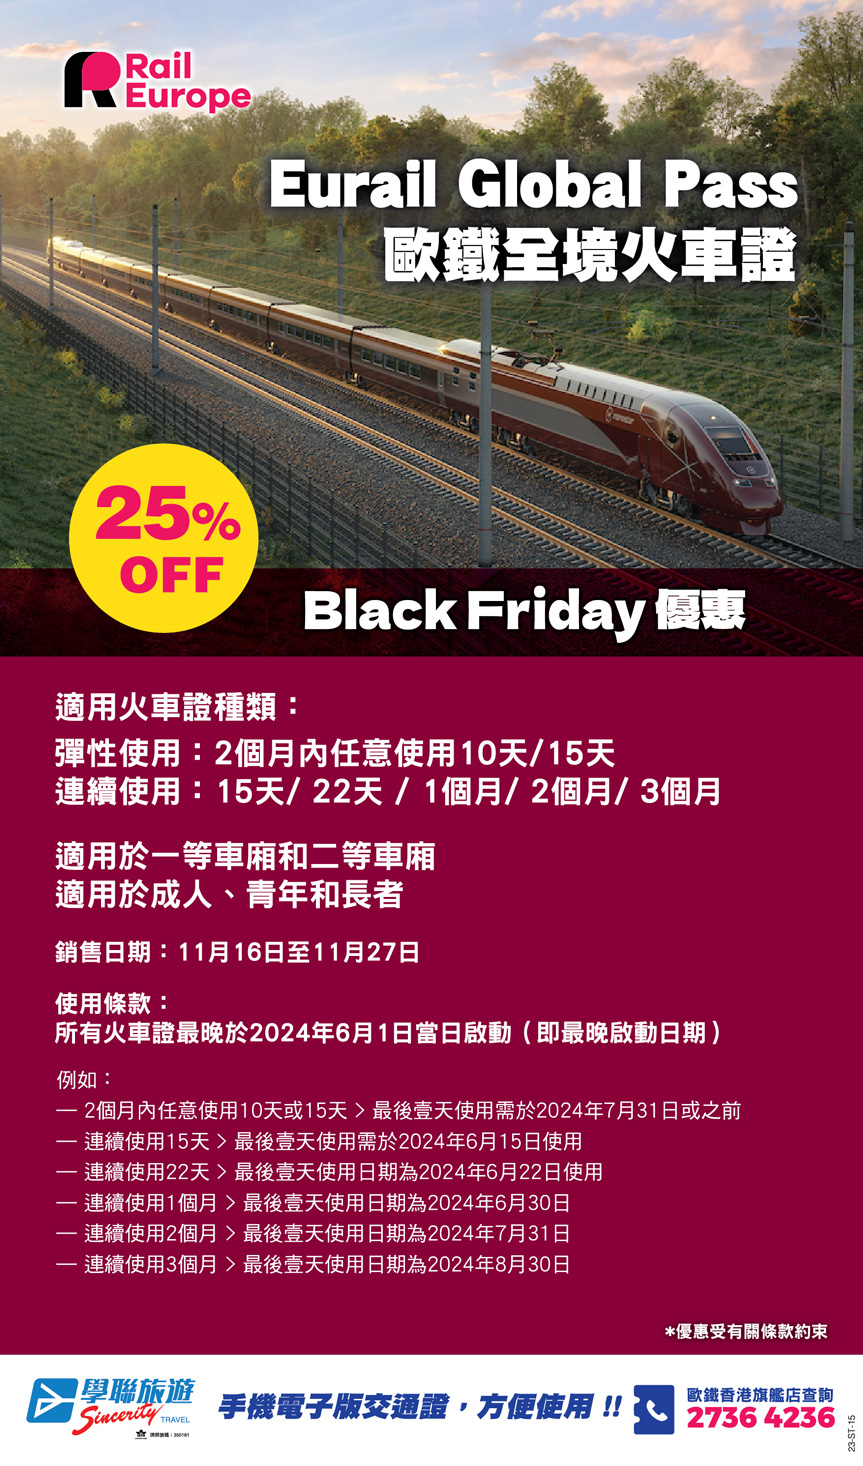 Eurail Global Pass 歐鐵全境通行證 Black Friday 優惠 